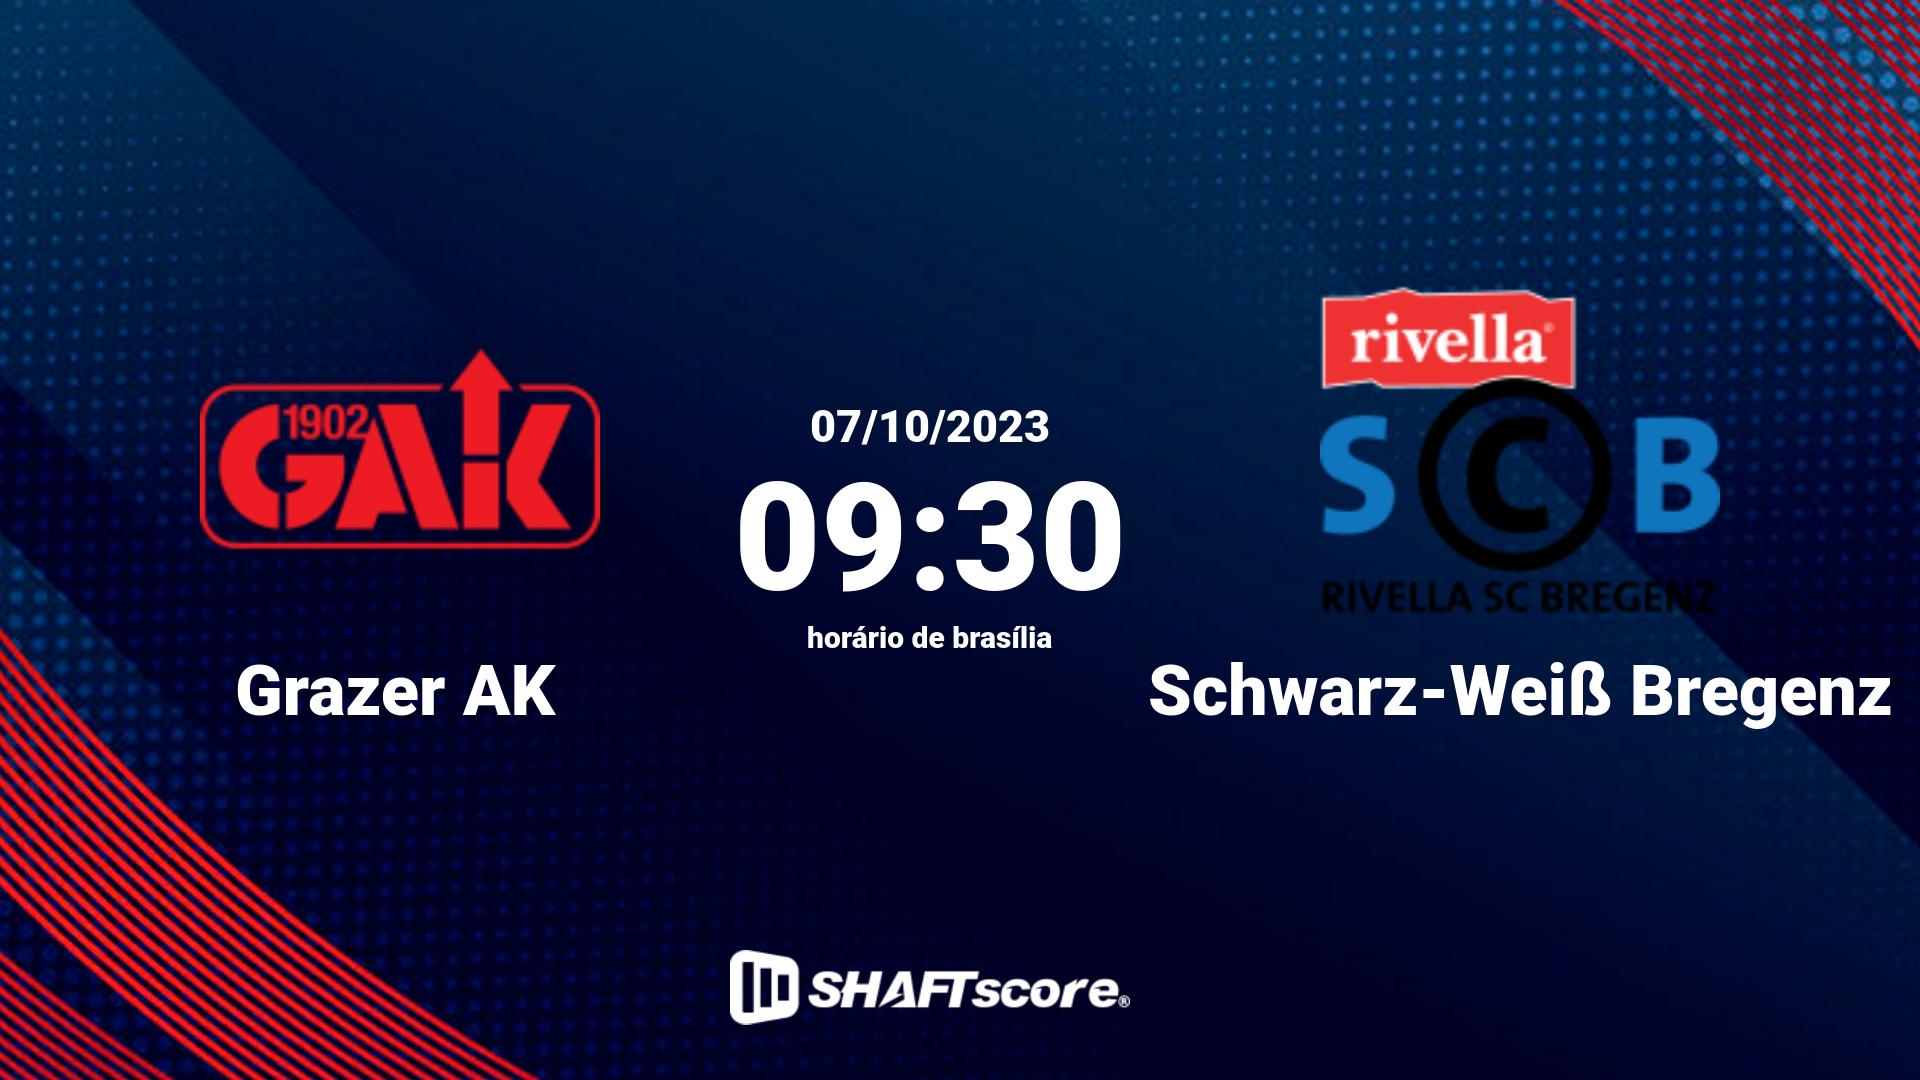 Estatísticas do jogo Grazer AK vs Schwarz-Weiß Bregenz 07.10 09:30